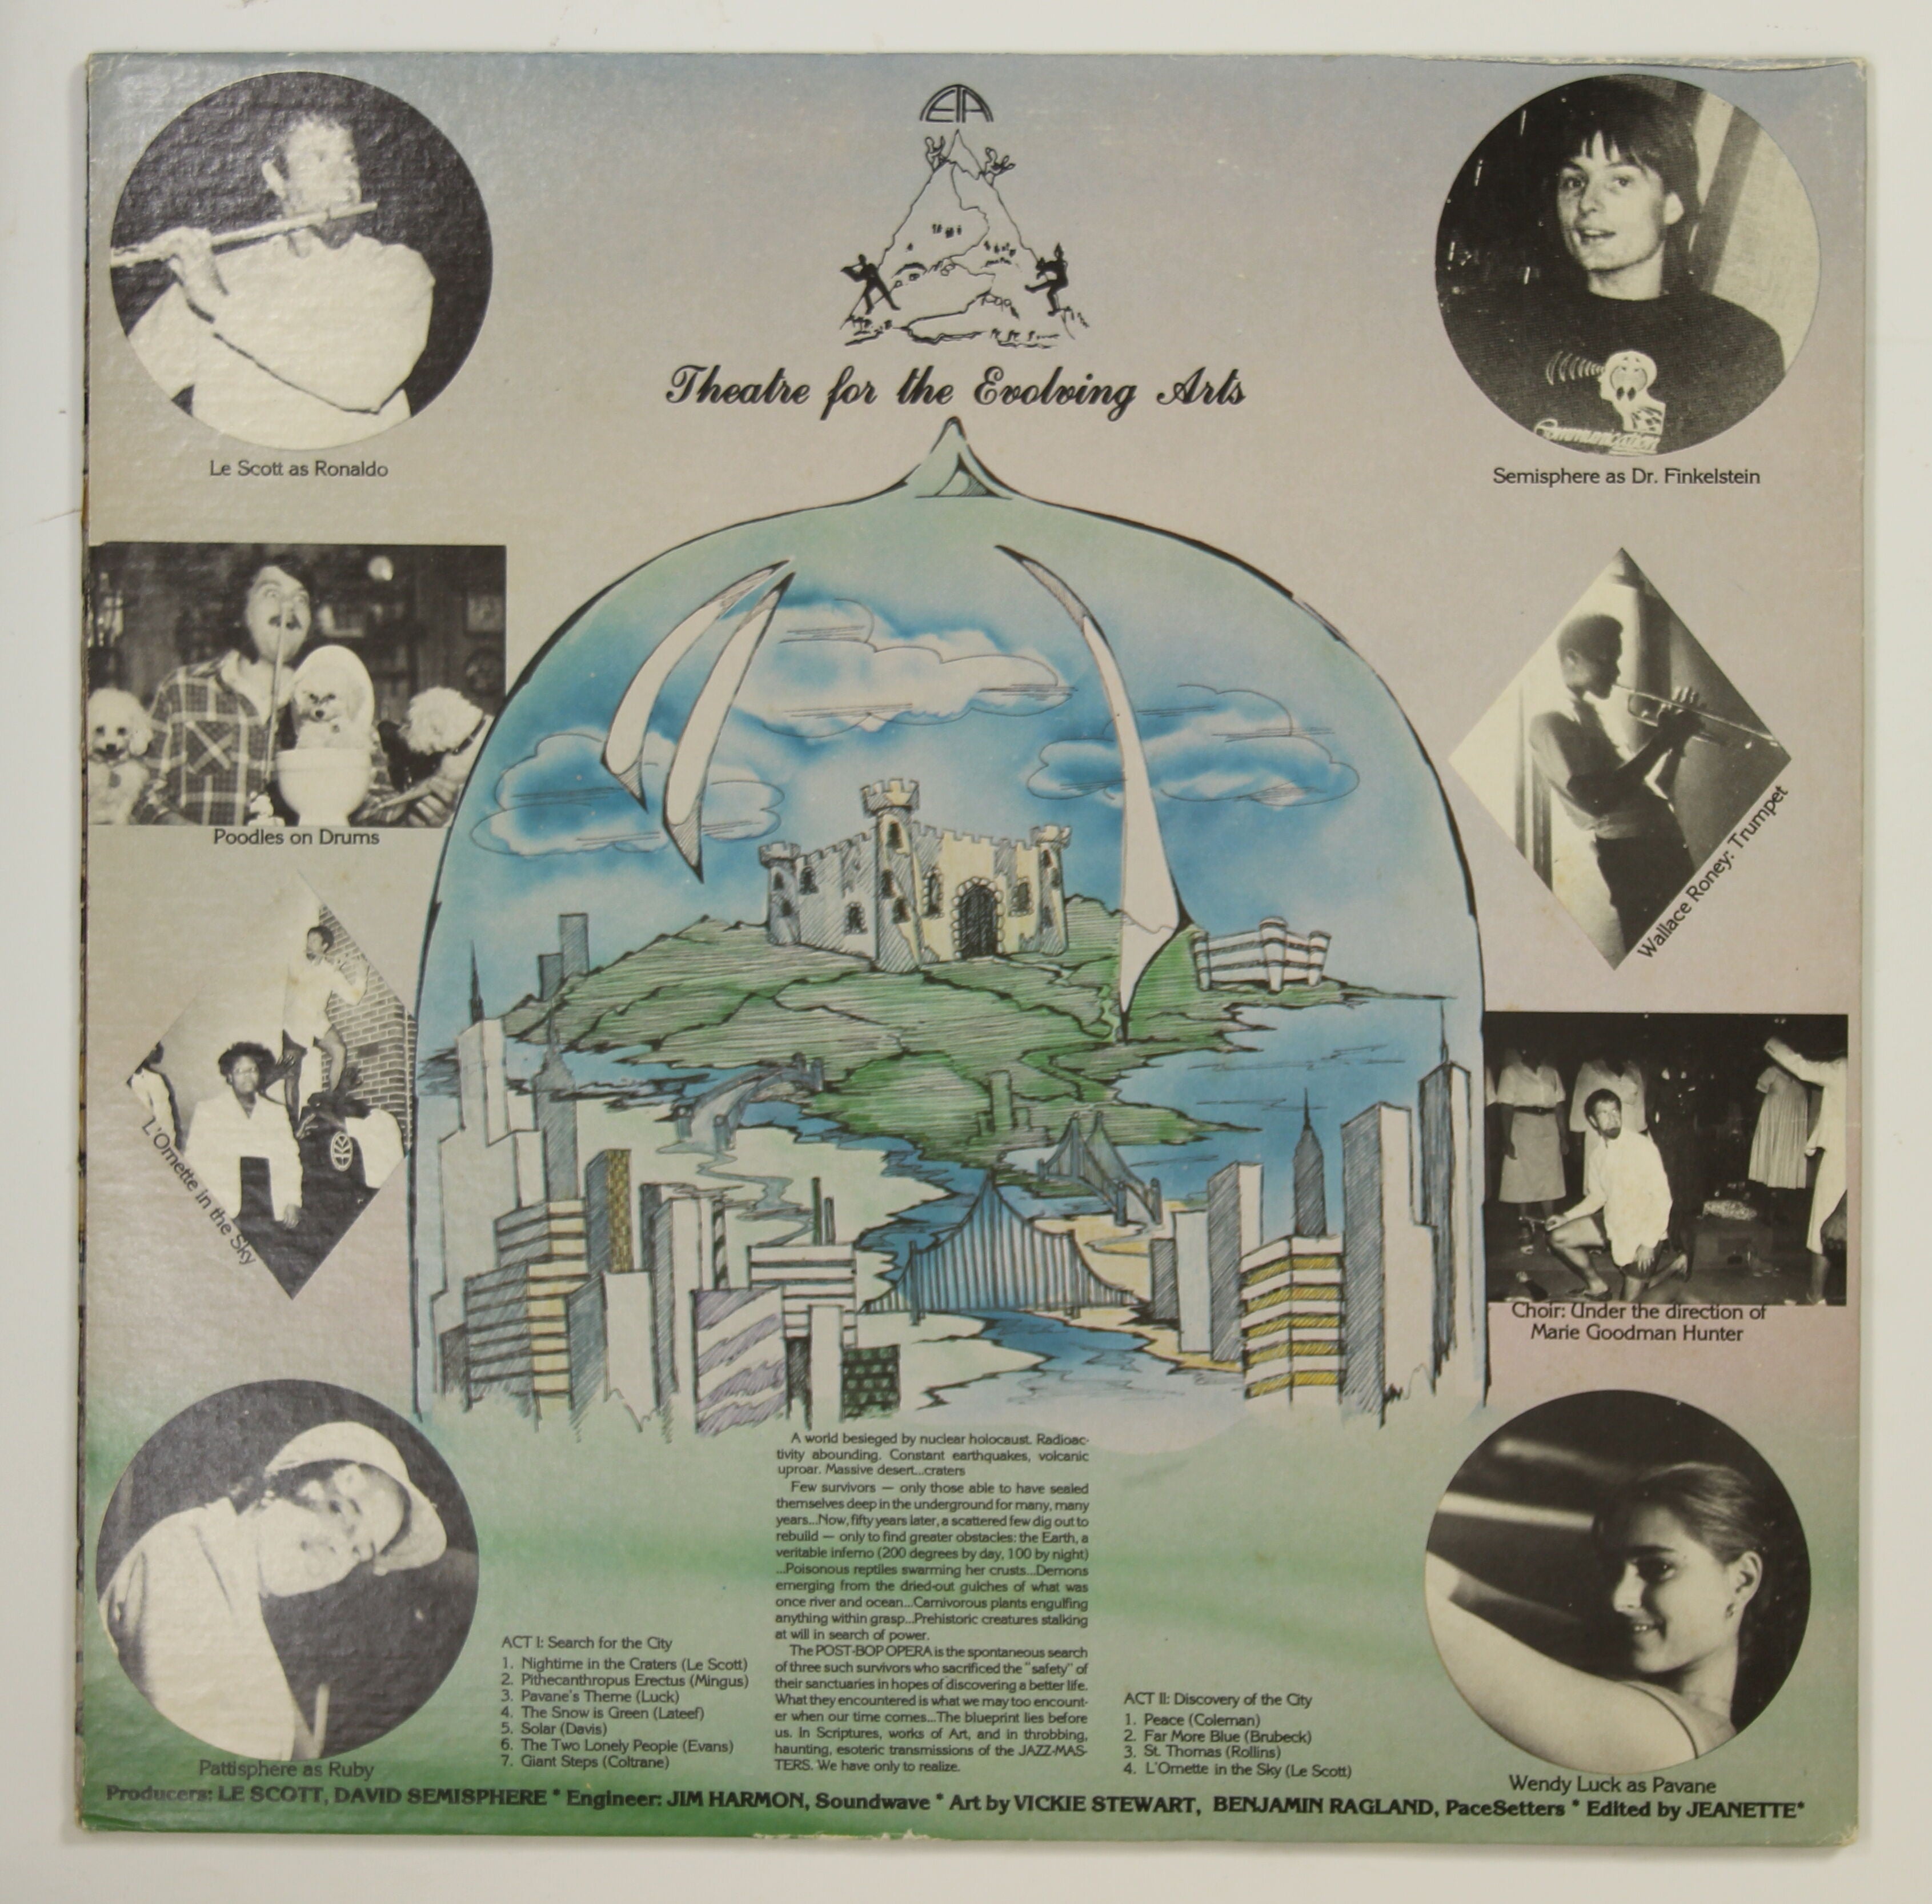 UNDER THE SKY／GREEN GIANT  レコード